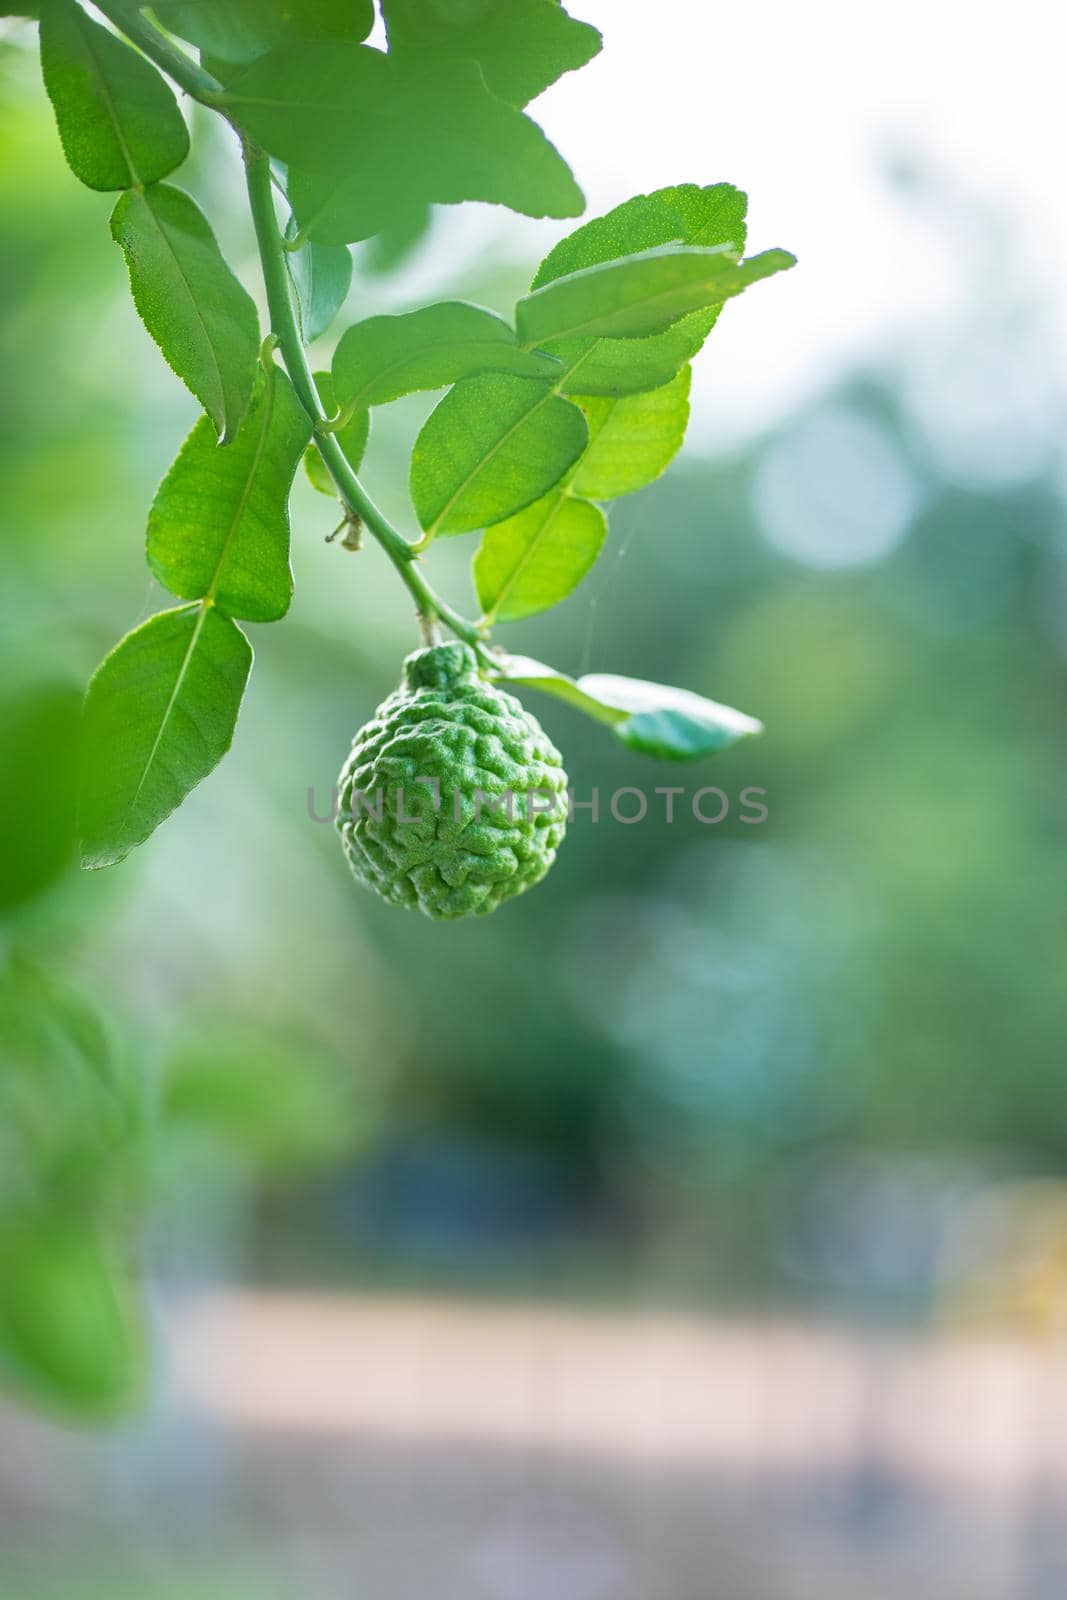 The bergamot fruit on the tree  with light bokeh background